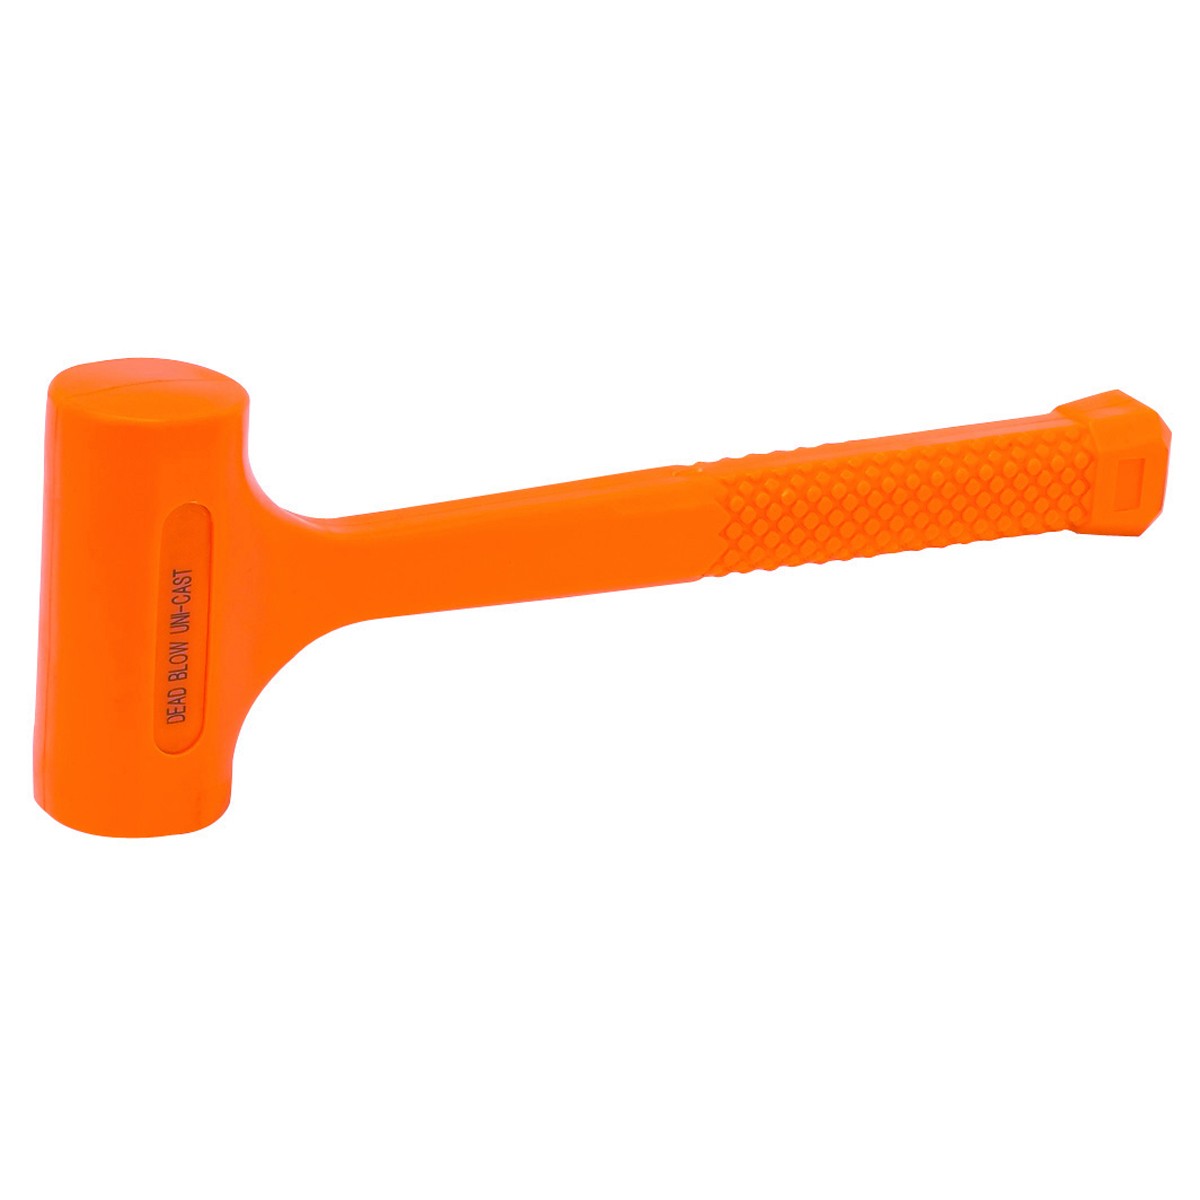 New   Pittsburgh  2-1/2 lb. Neon Orange Dead Blow Hammer